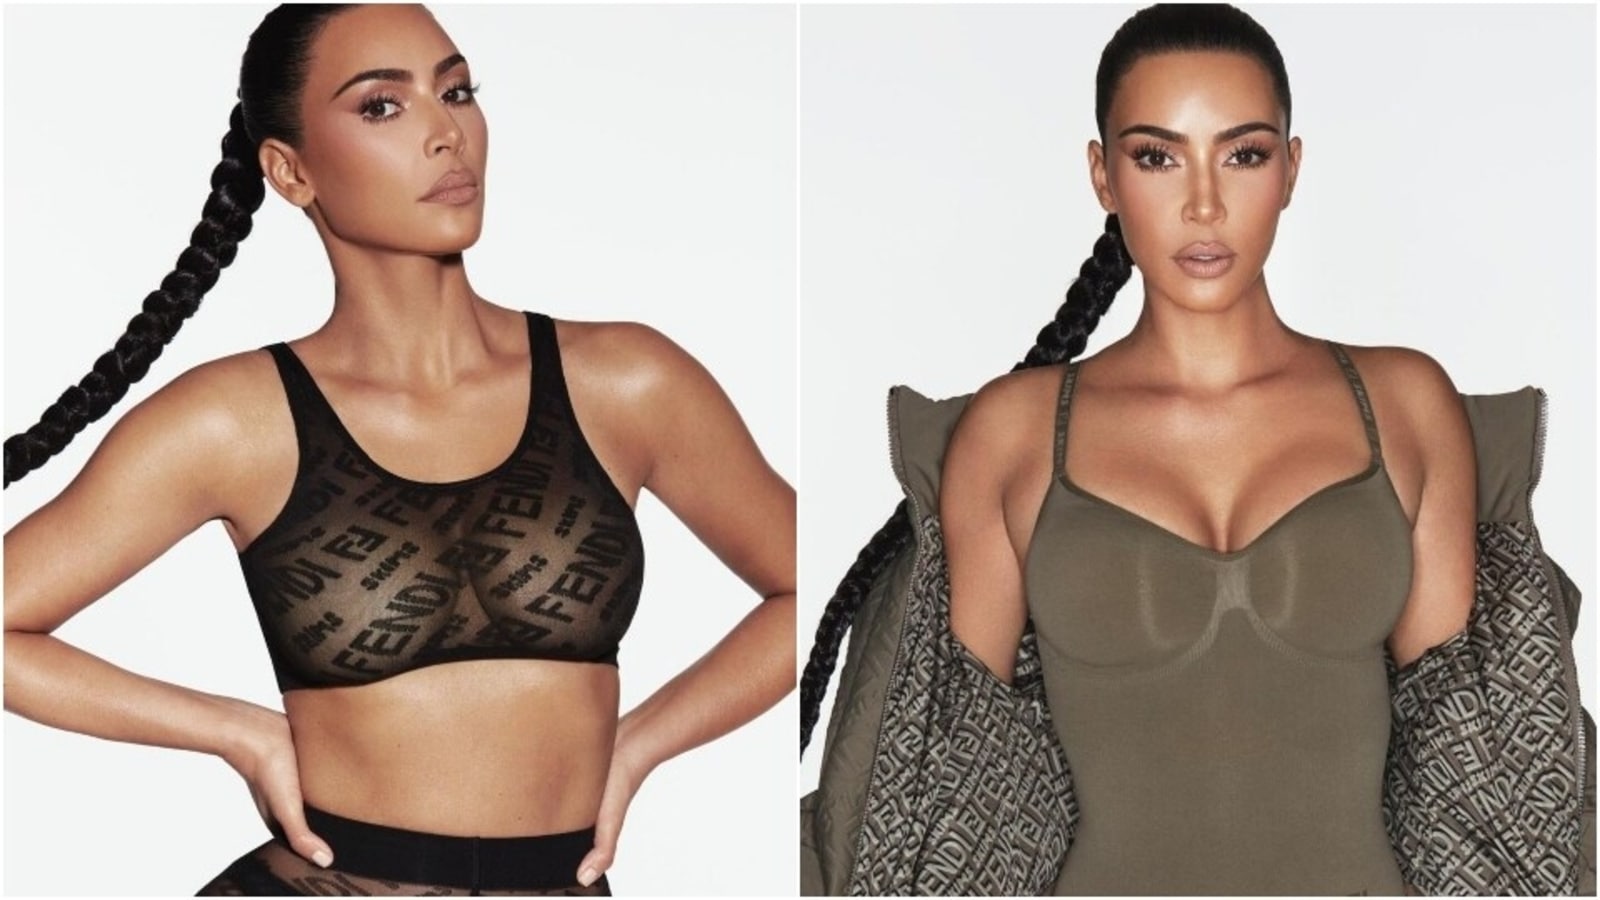 Kim Kardashian's SKIMS brand is designing the official